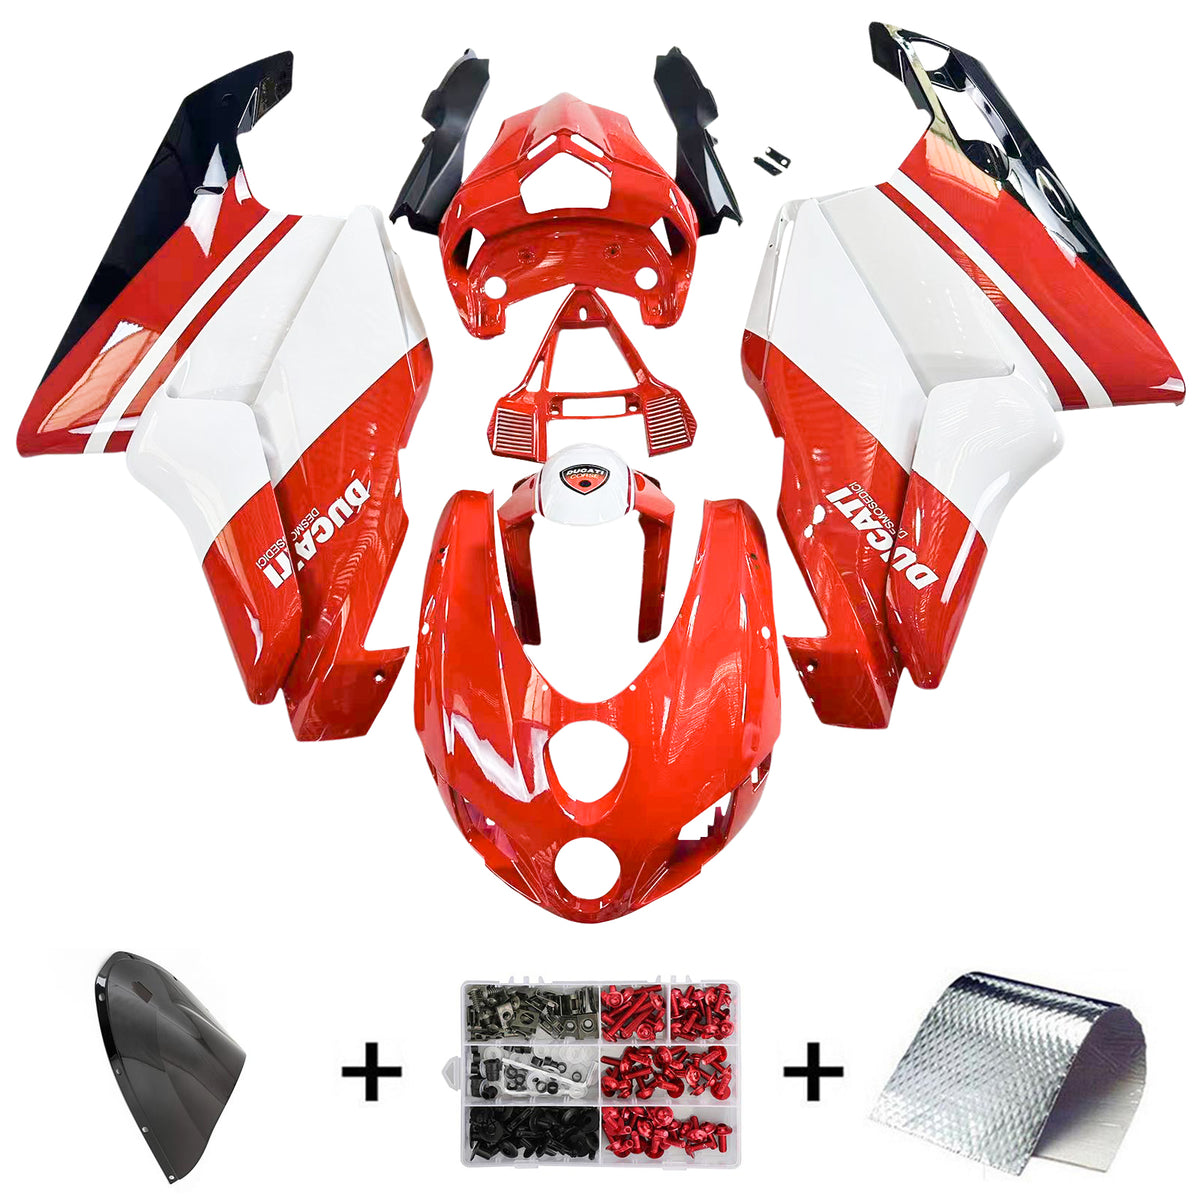 Amotopart 2003 2004 Ducati 999 749 Kit carena Style8 rosso e bianco